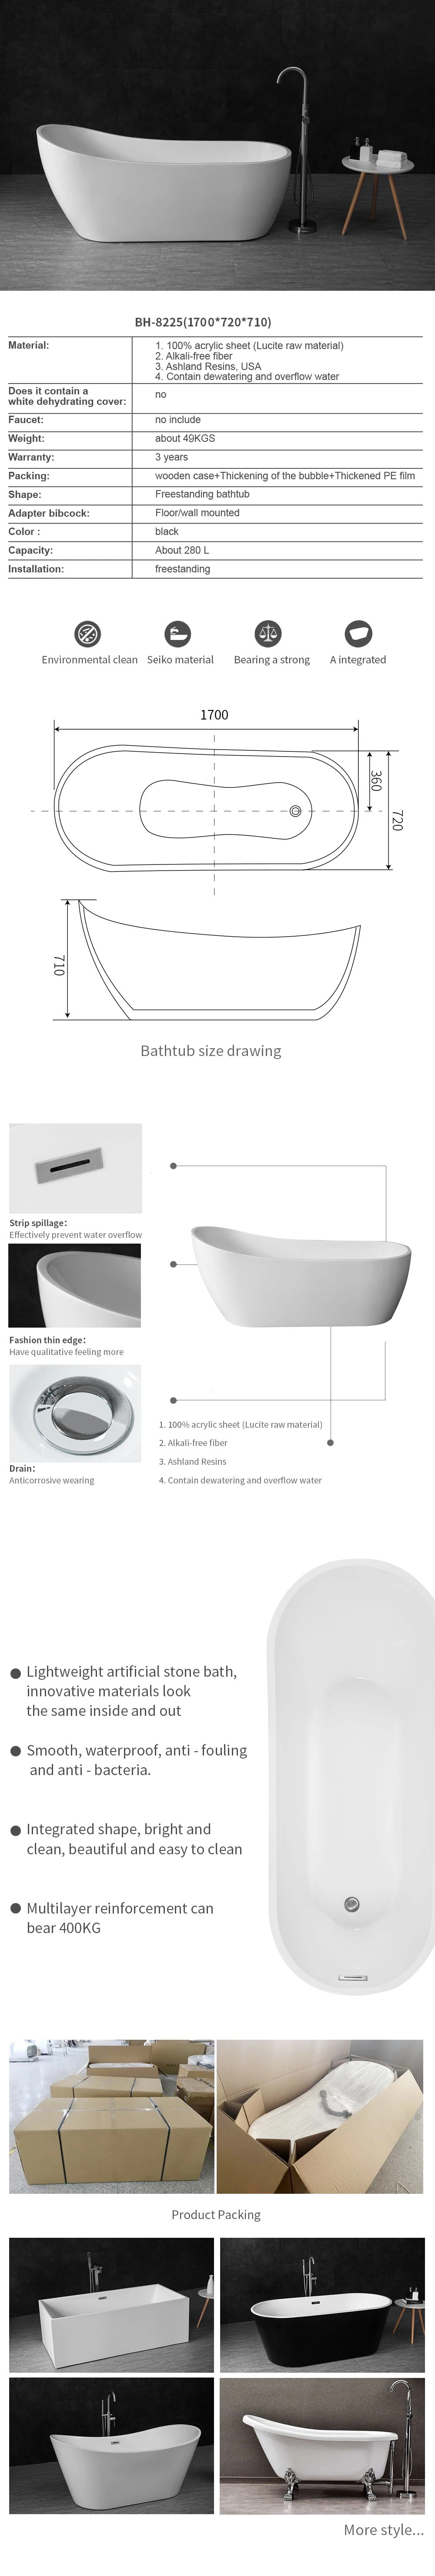 Fashionable Acrylic Durable Whirlpool Bathtub Freestanding White Bath Tub